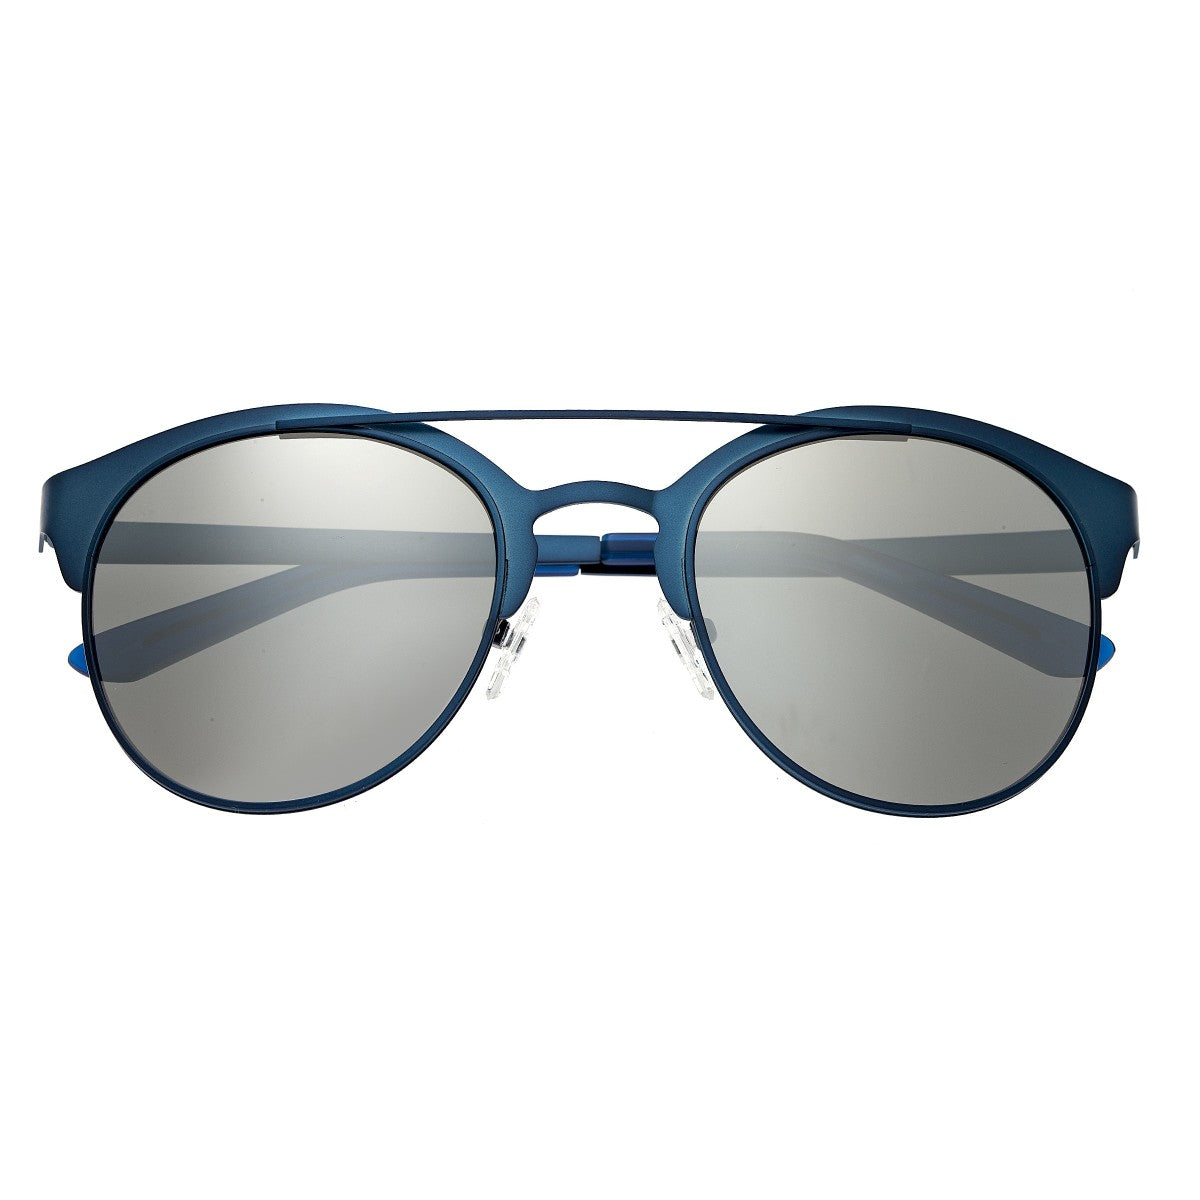 Breed Phoenix Titanium Polarized Sunglasses - Blue/Silver - BSG036BL